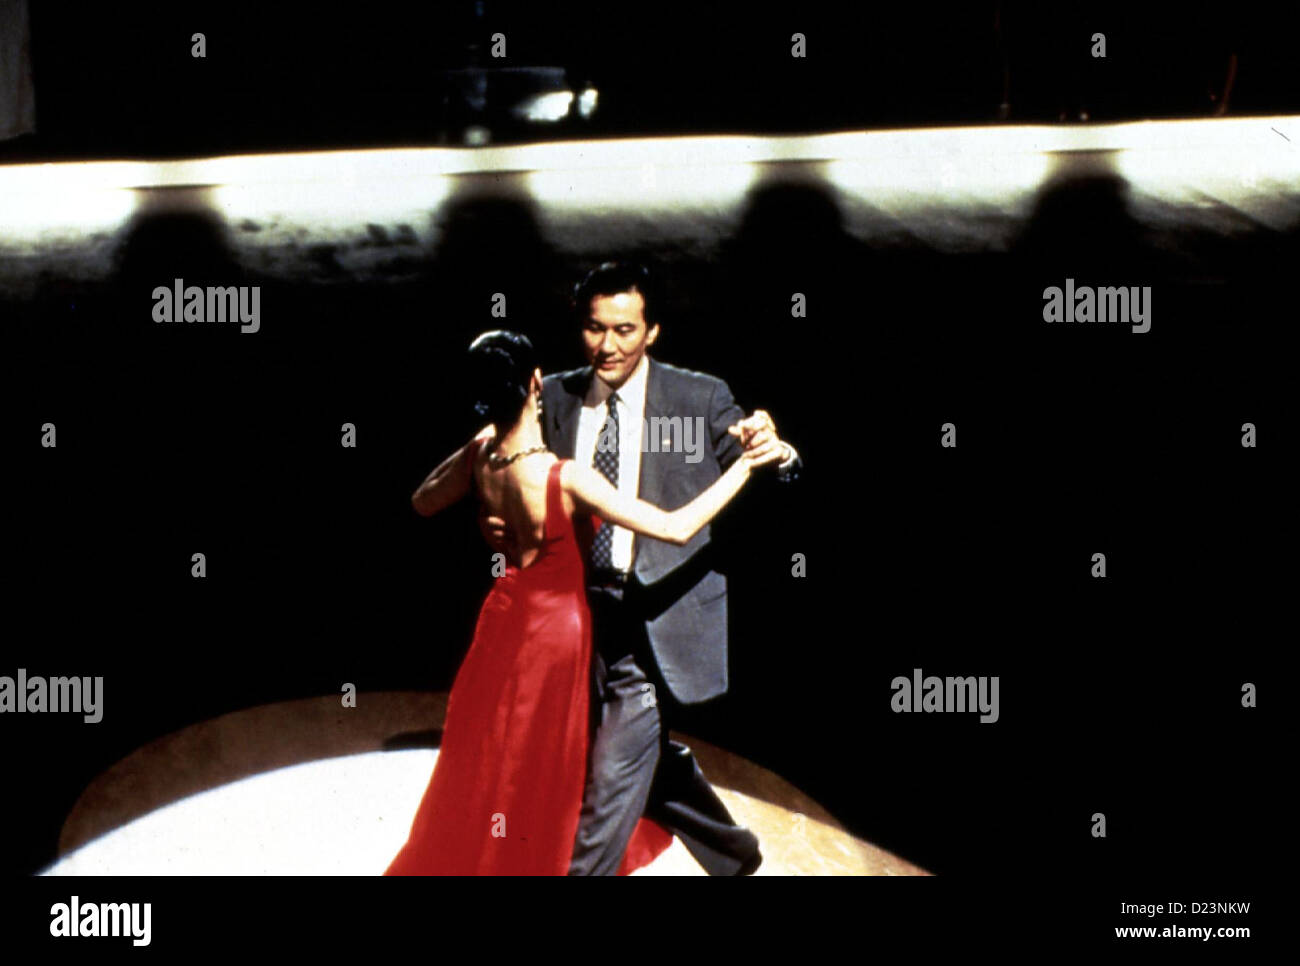 Shall We Dance?  Shall We Dance  Mai Kishikawa (Tamiyo Kusakari), Shohei Sugiyama (Koji Yakusho) *** Local Caption *** 1997 -- Stock Photo